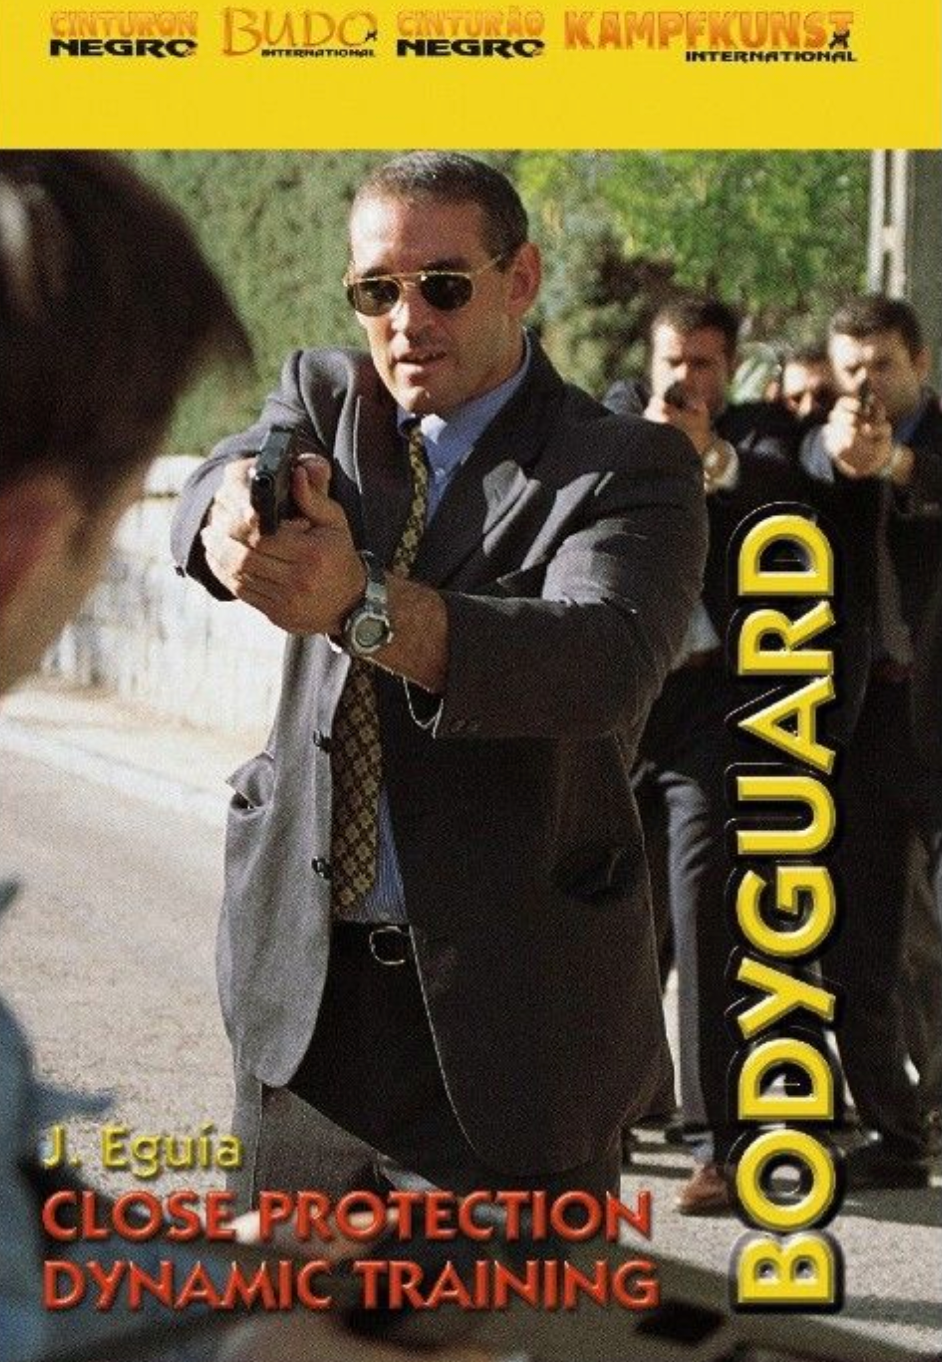 Bodyguard Dynamic Training DVD with J Eguia - Budovideos Inc